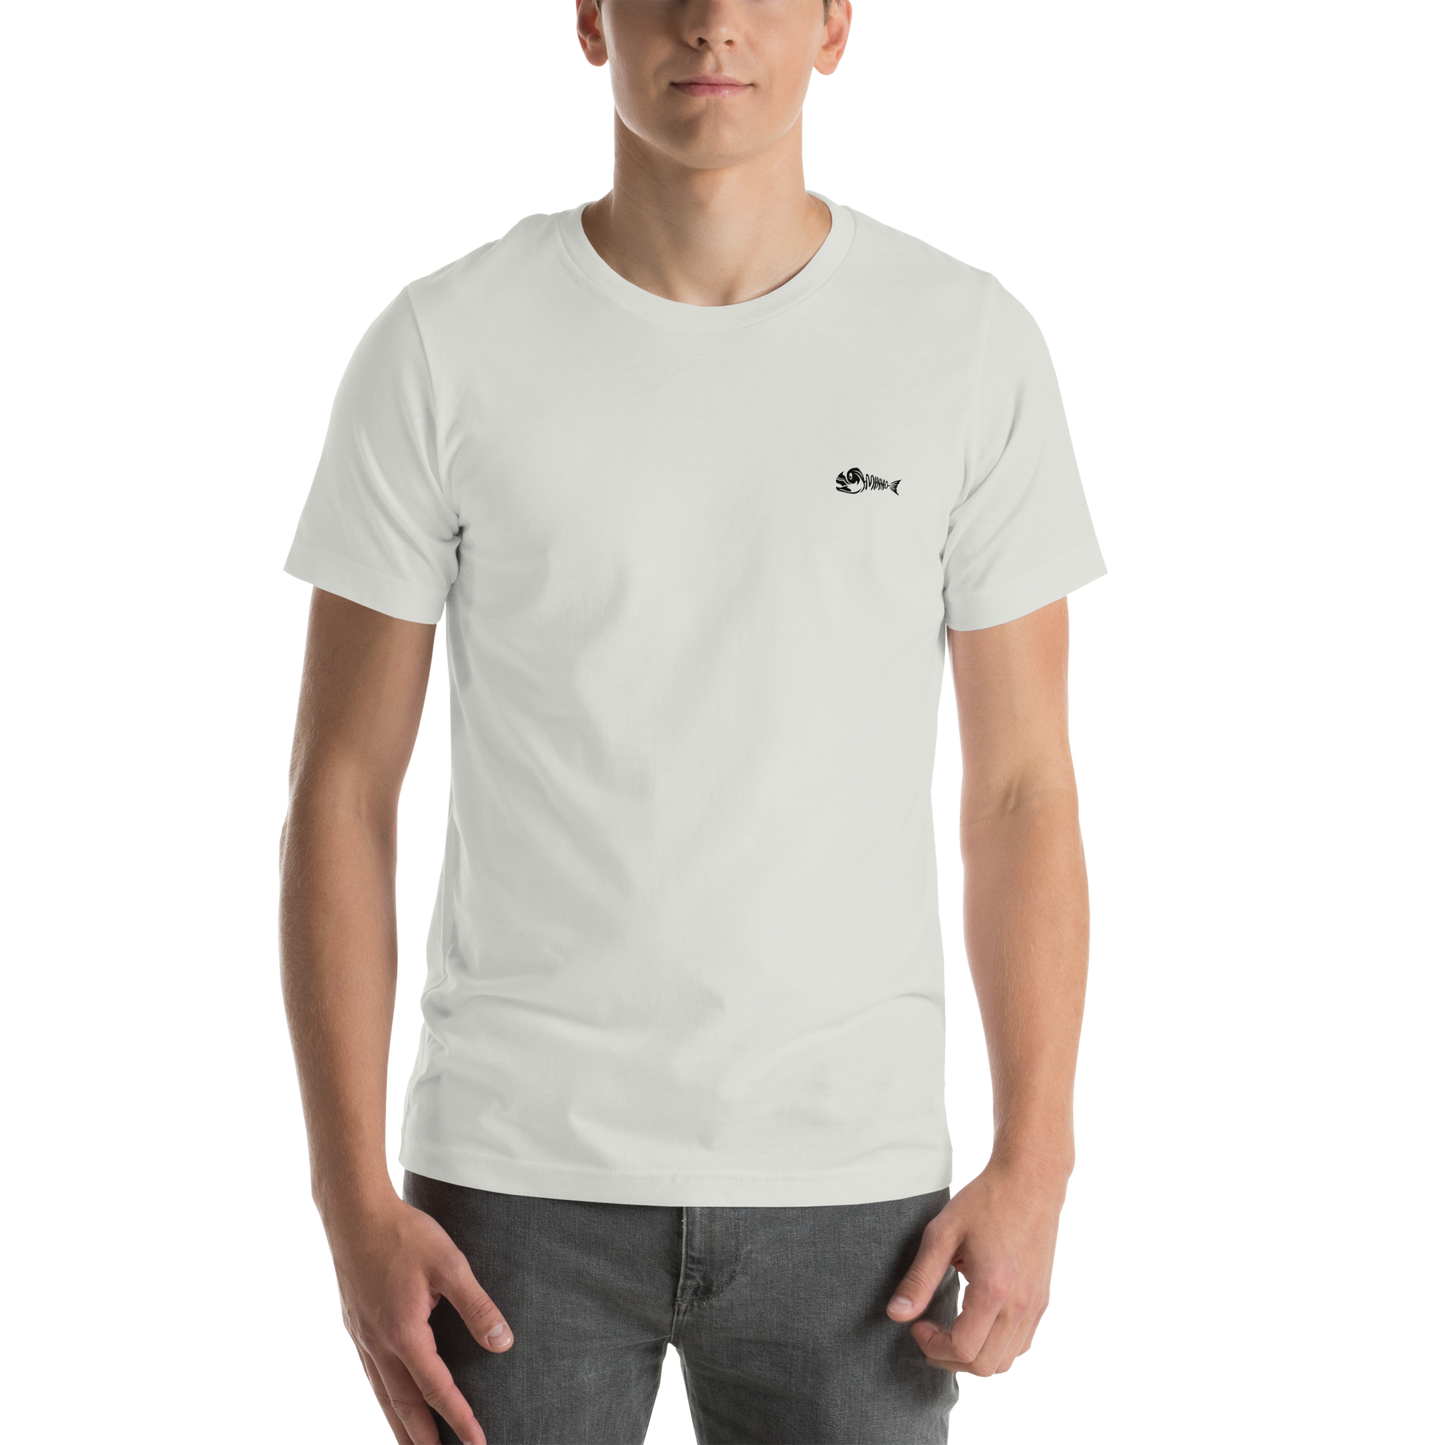 Minno Unisex T-shirt - Fishing (Full Colour)